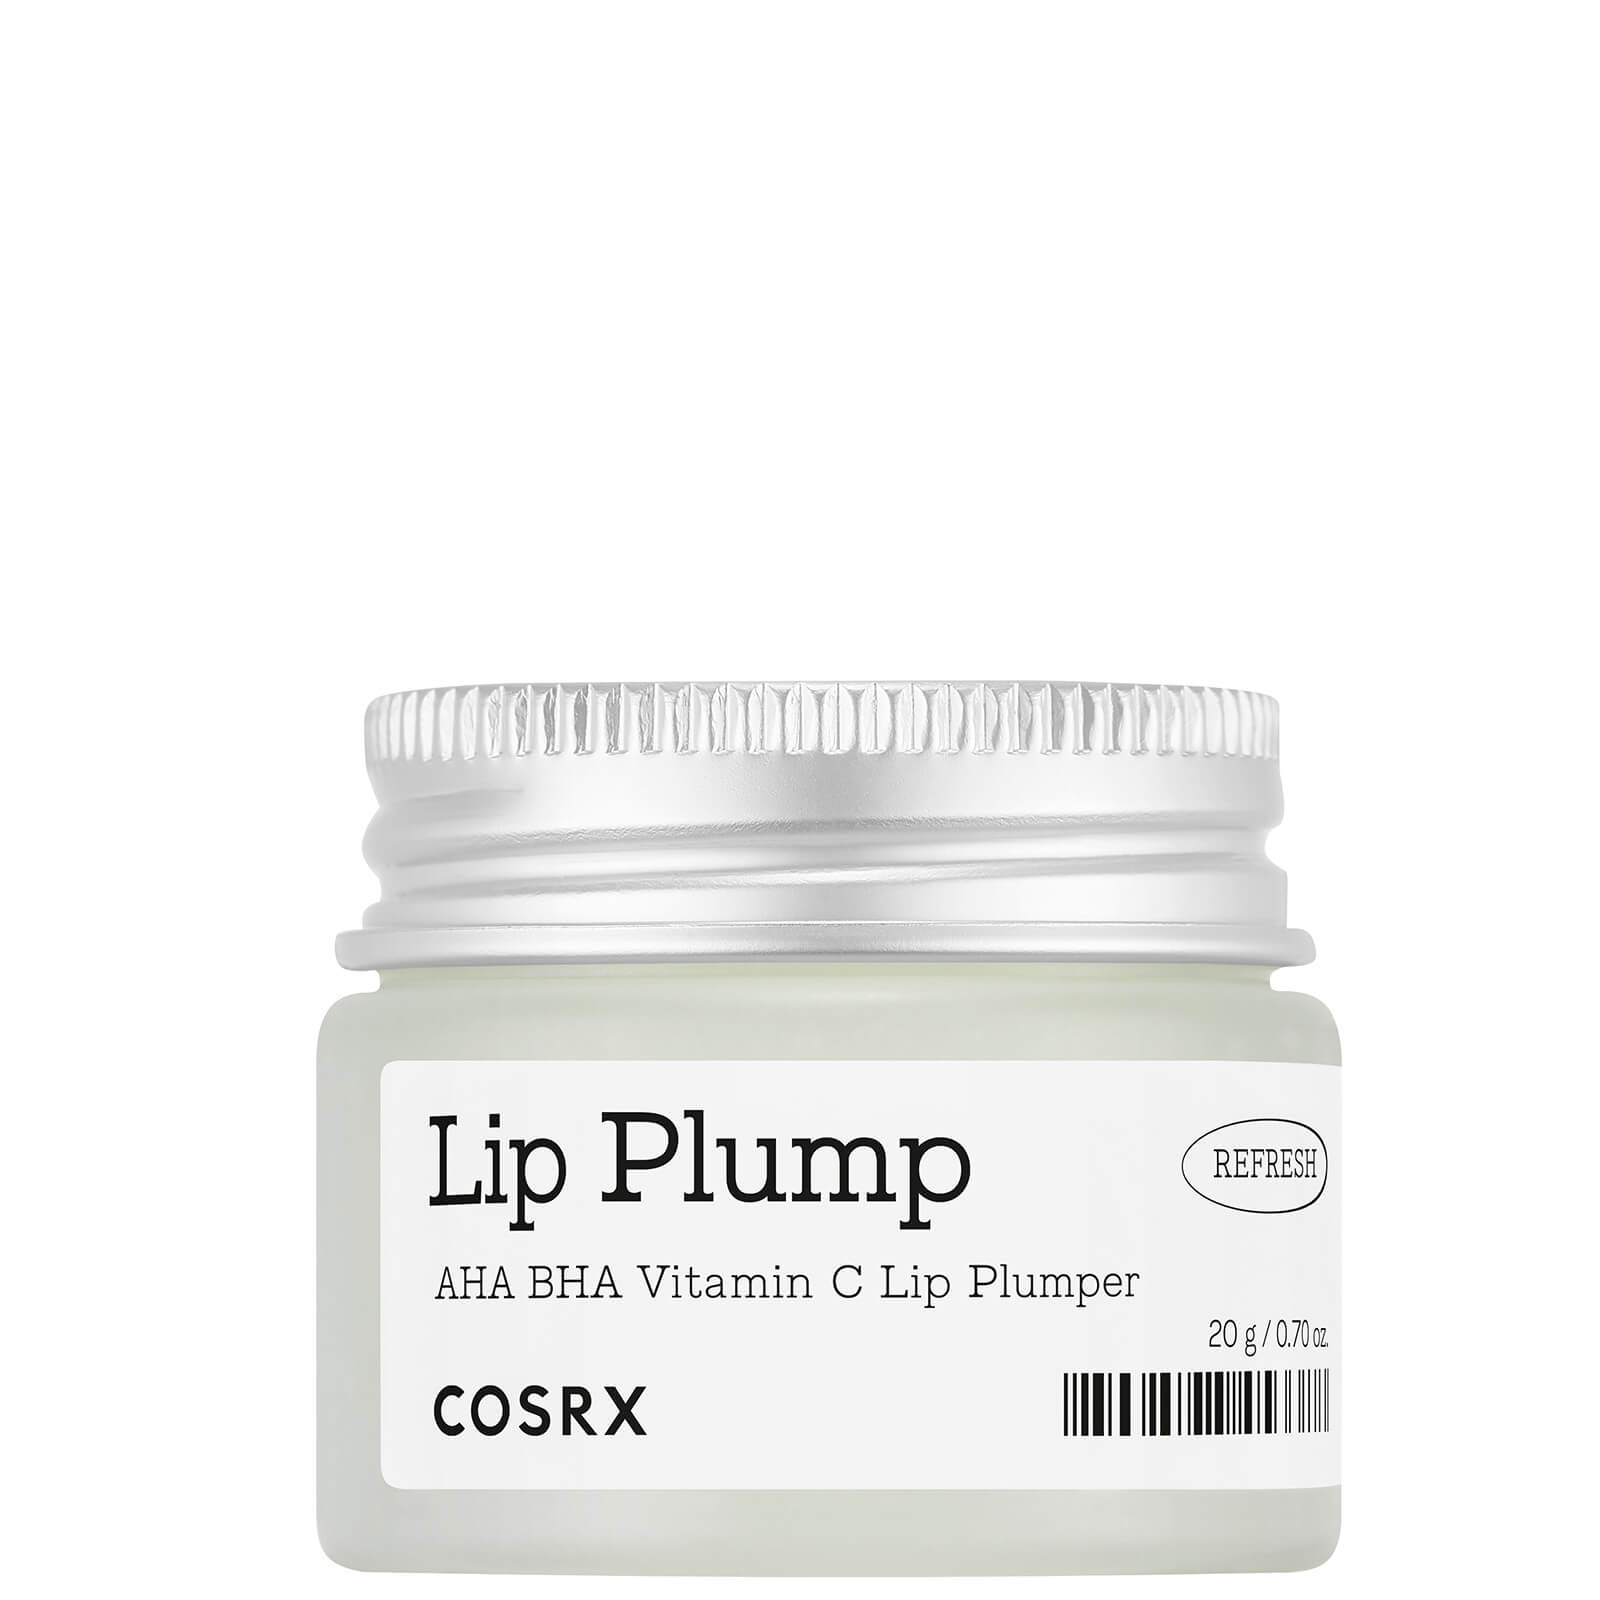 Cosrx Refresh Aha Bha Vitamin C Lip Plumper 20g